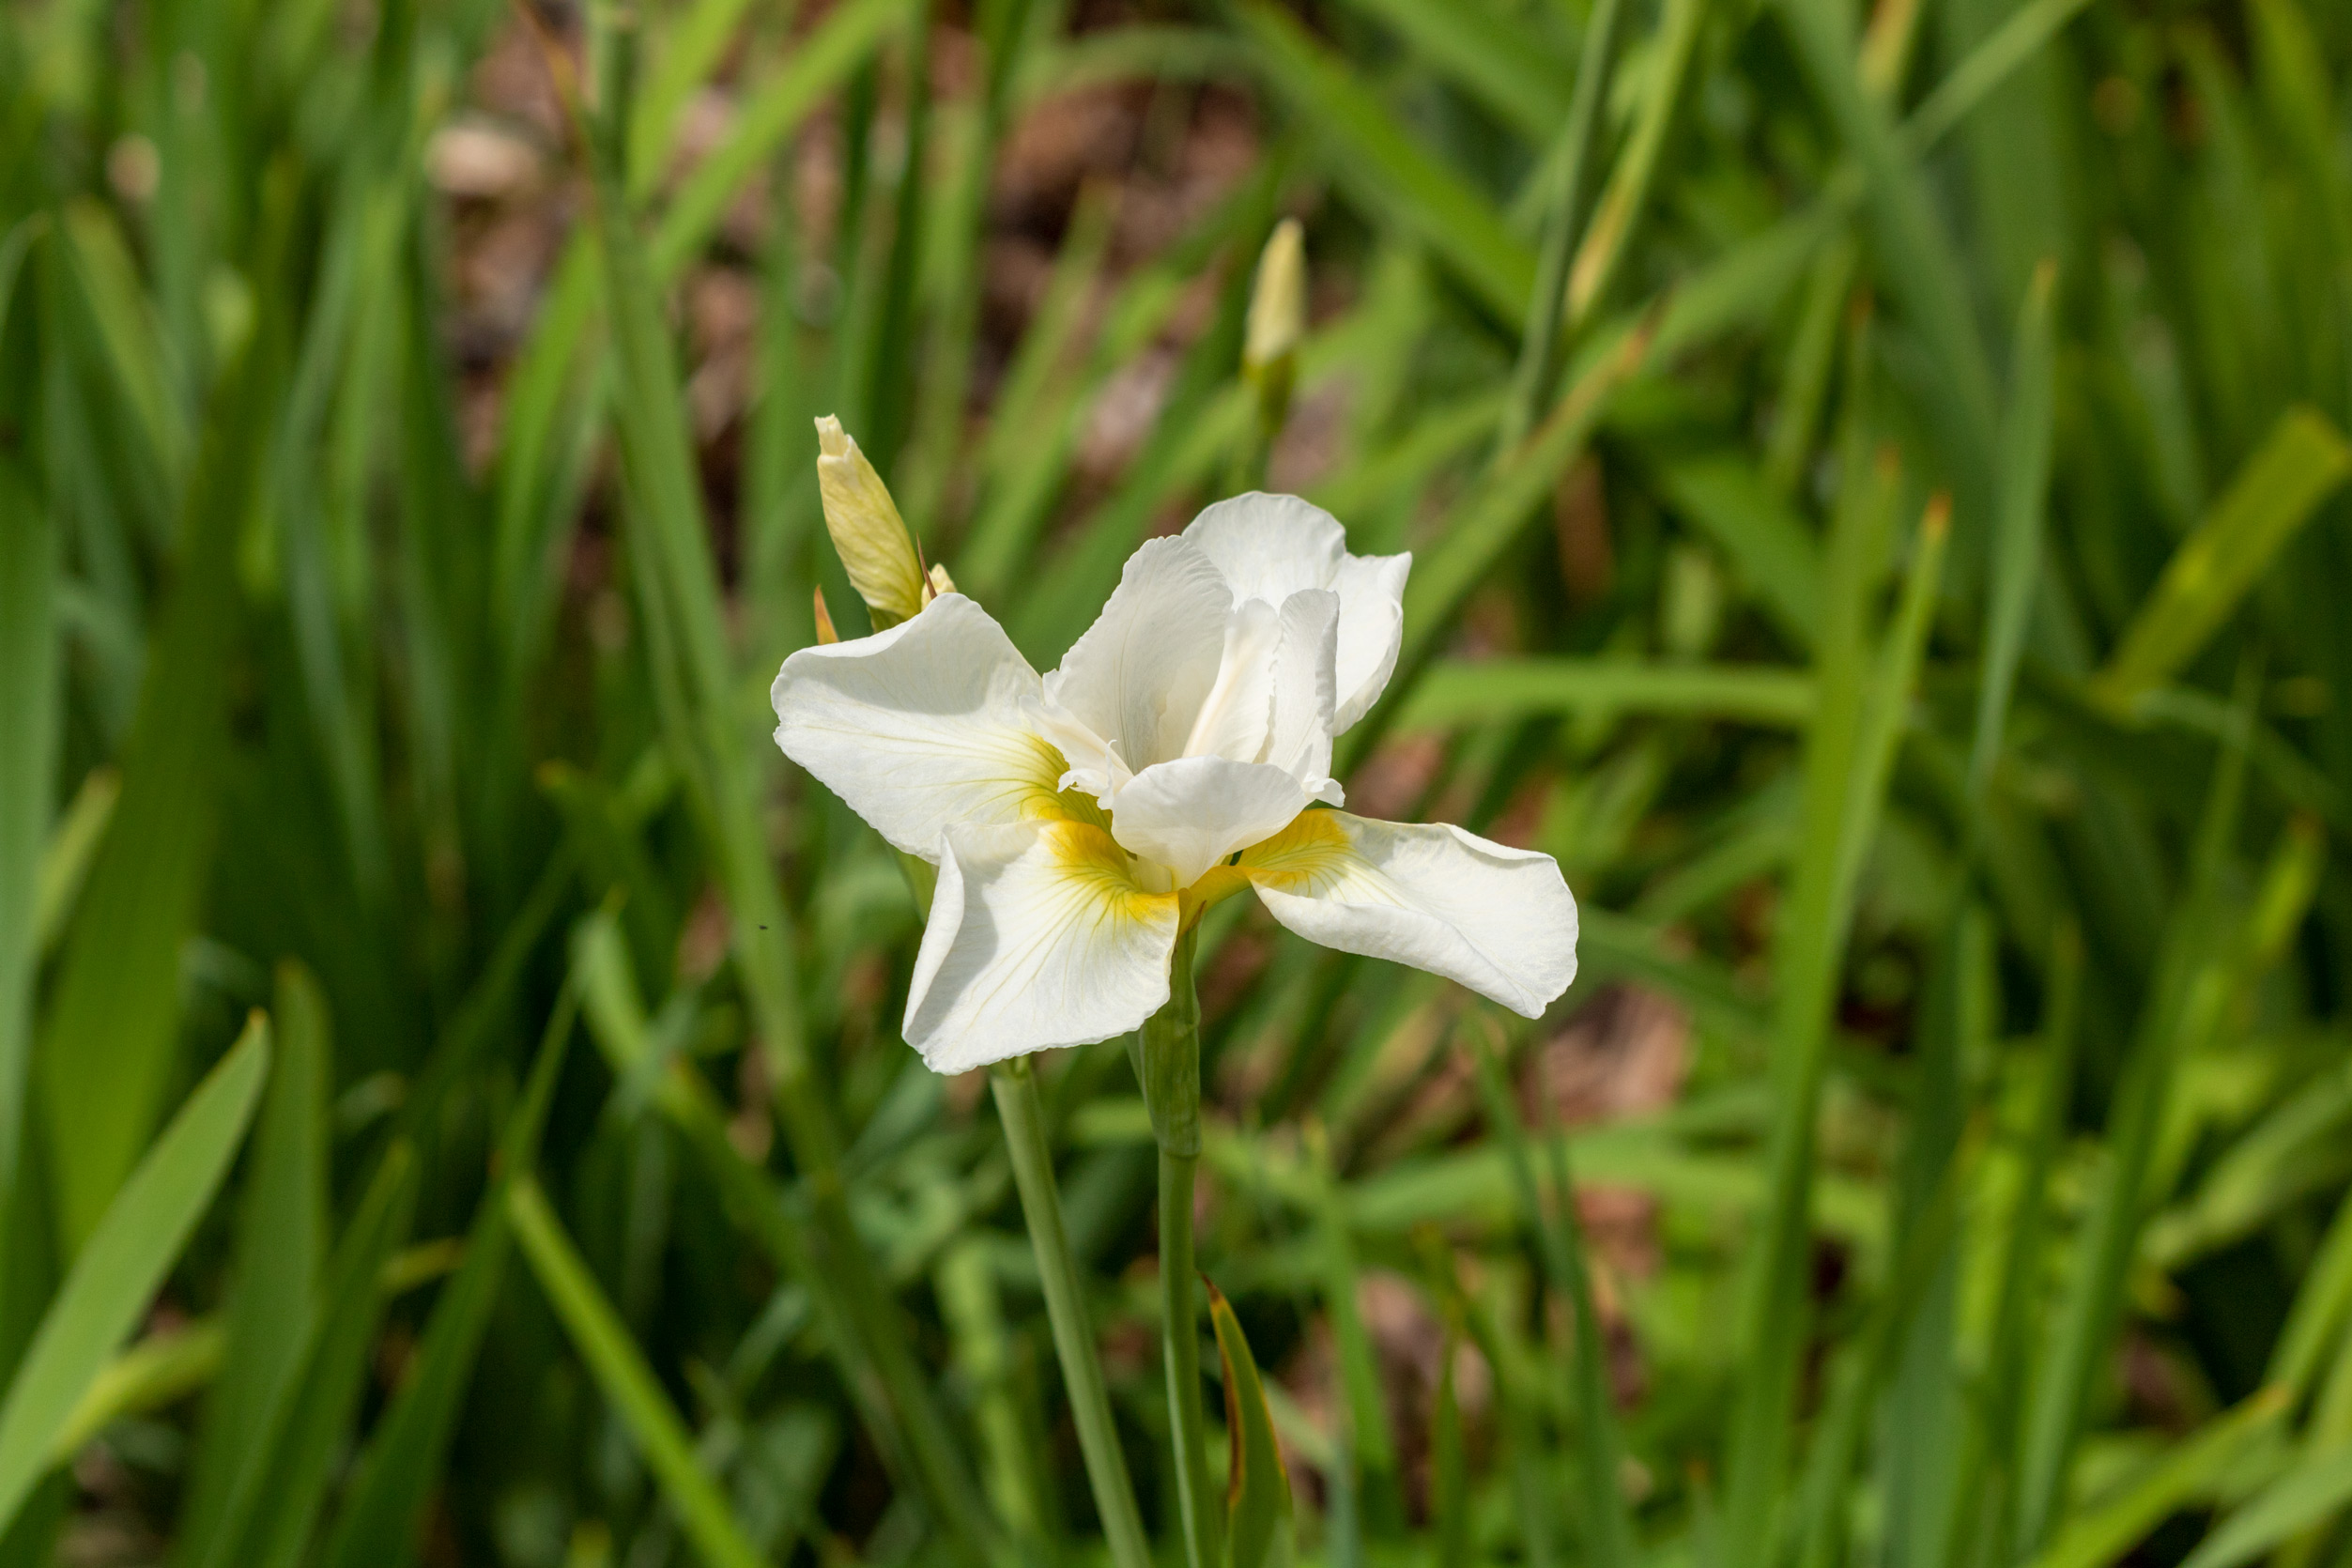 White iris against a blurred leafy background